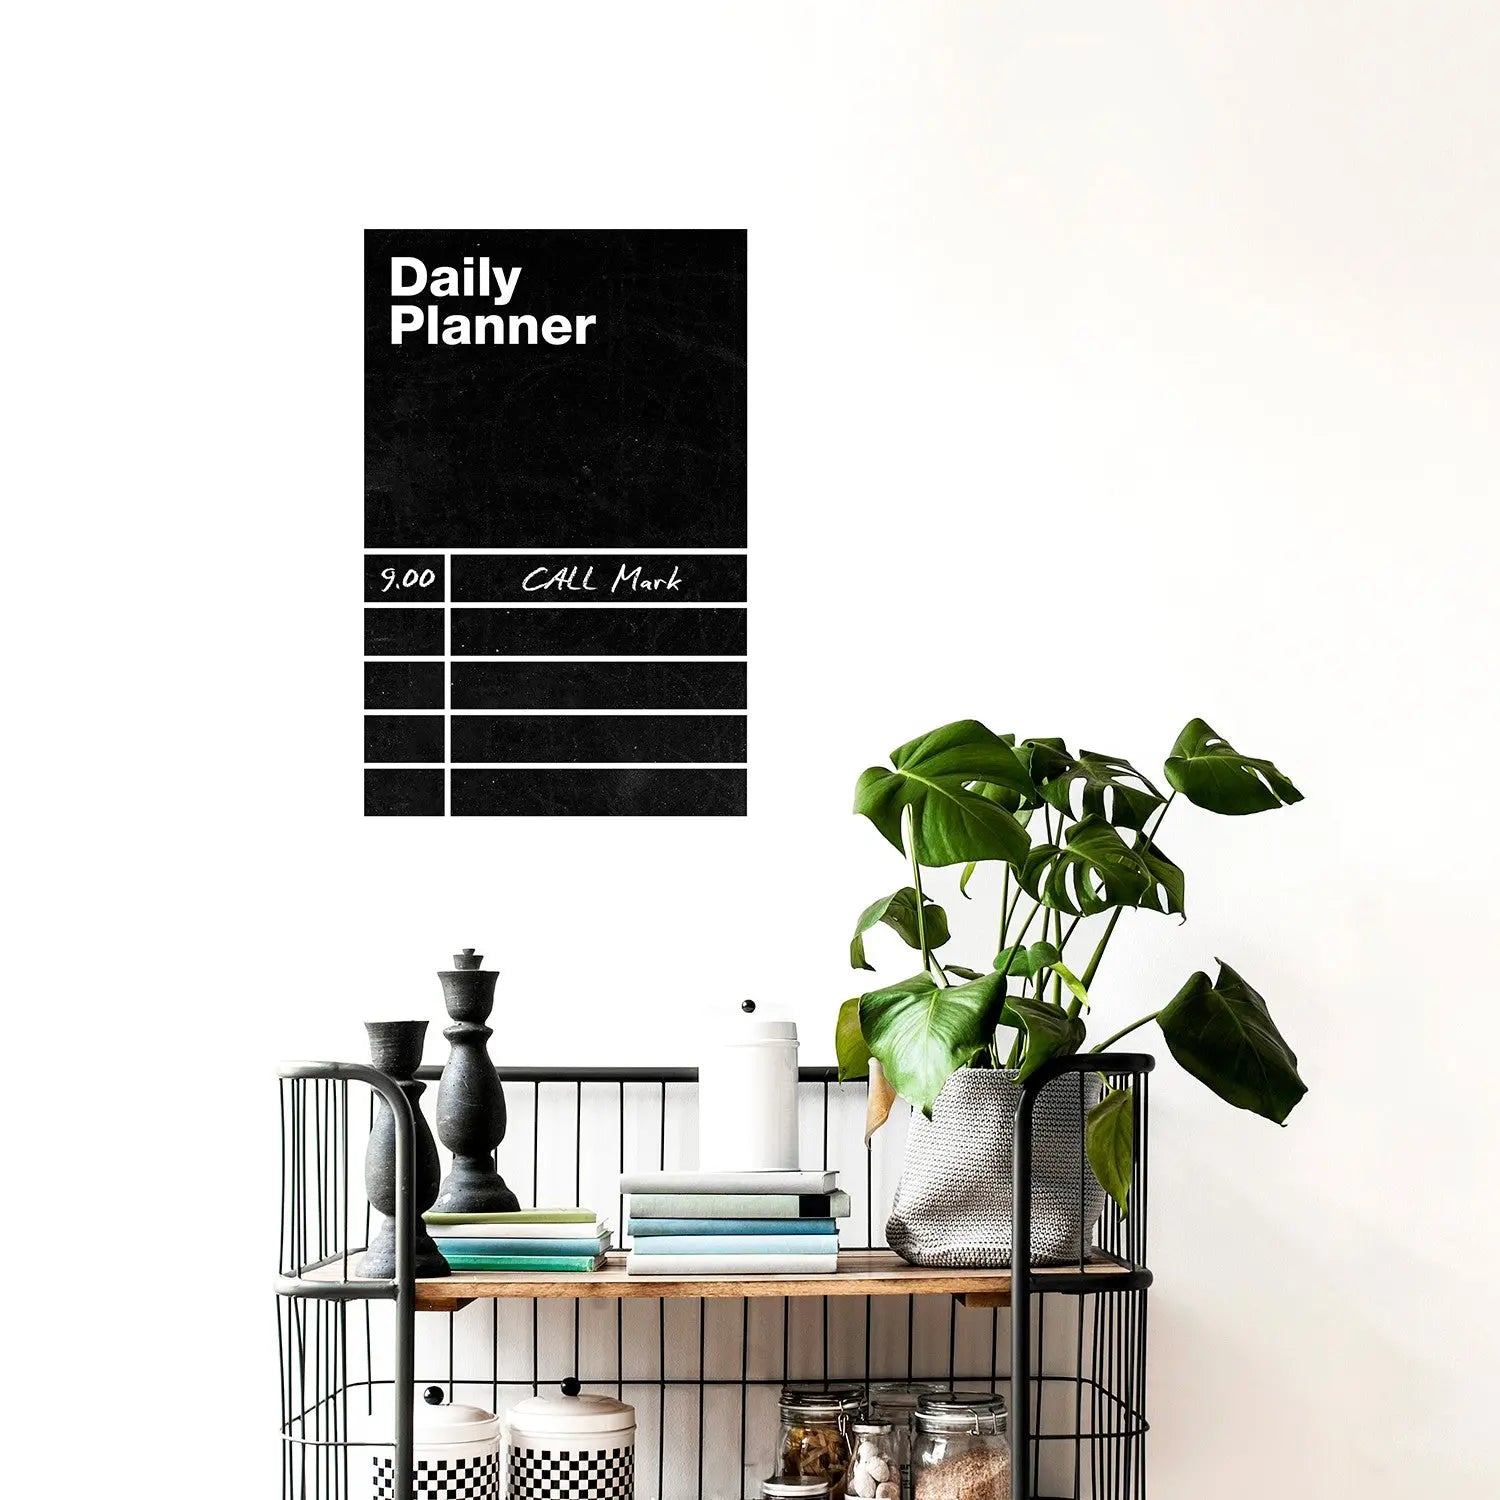 Daily Planner WEEW Design